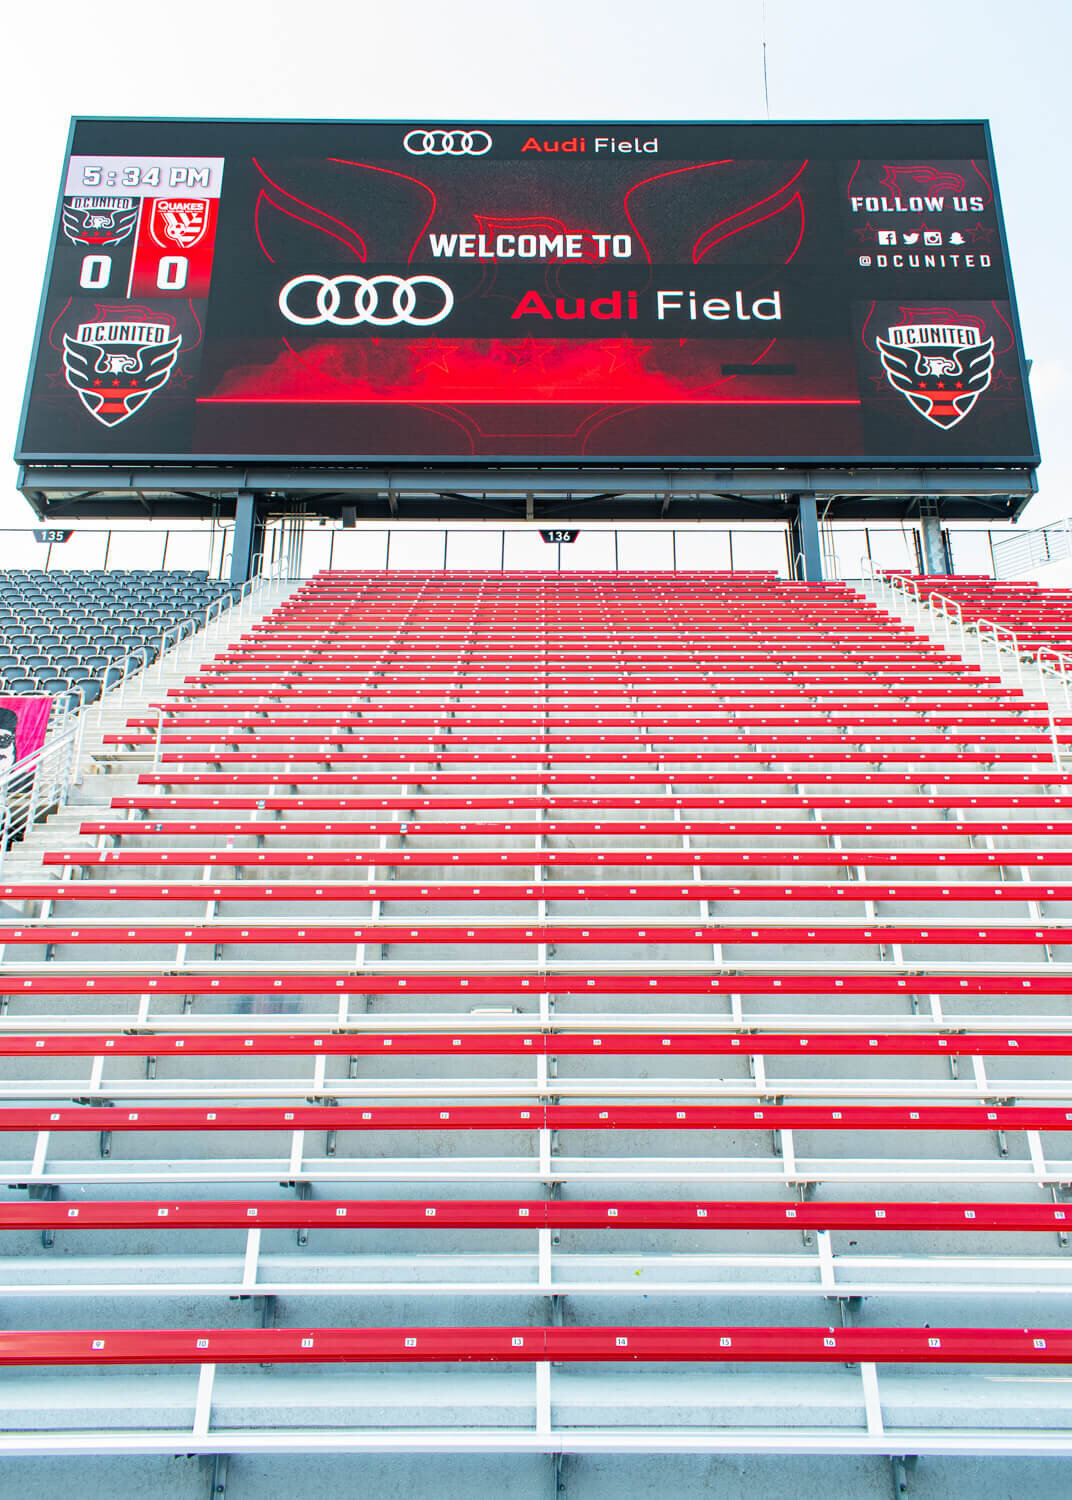 Audi-Field-Washington-DC-United-MLS-Soccer-Stadium-crvnka-Photography-15.JPG